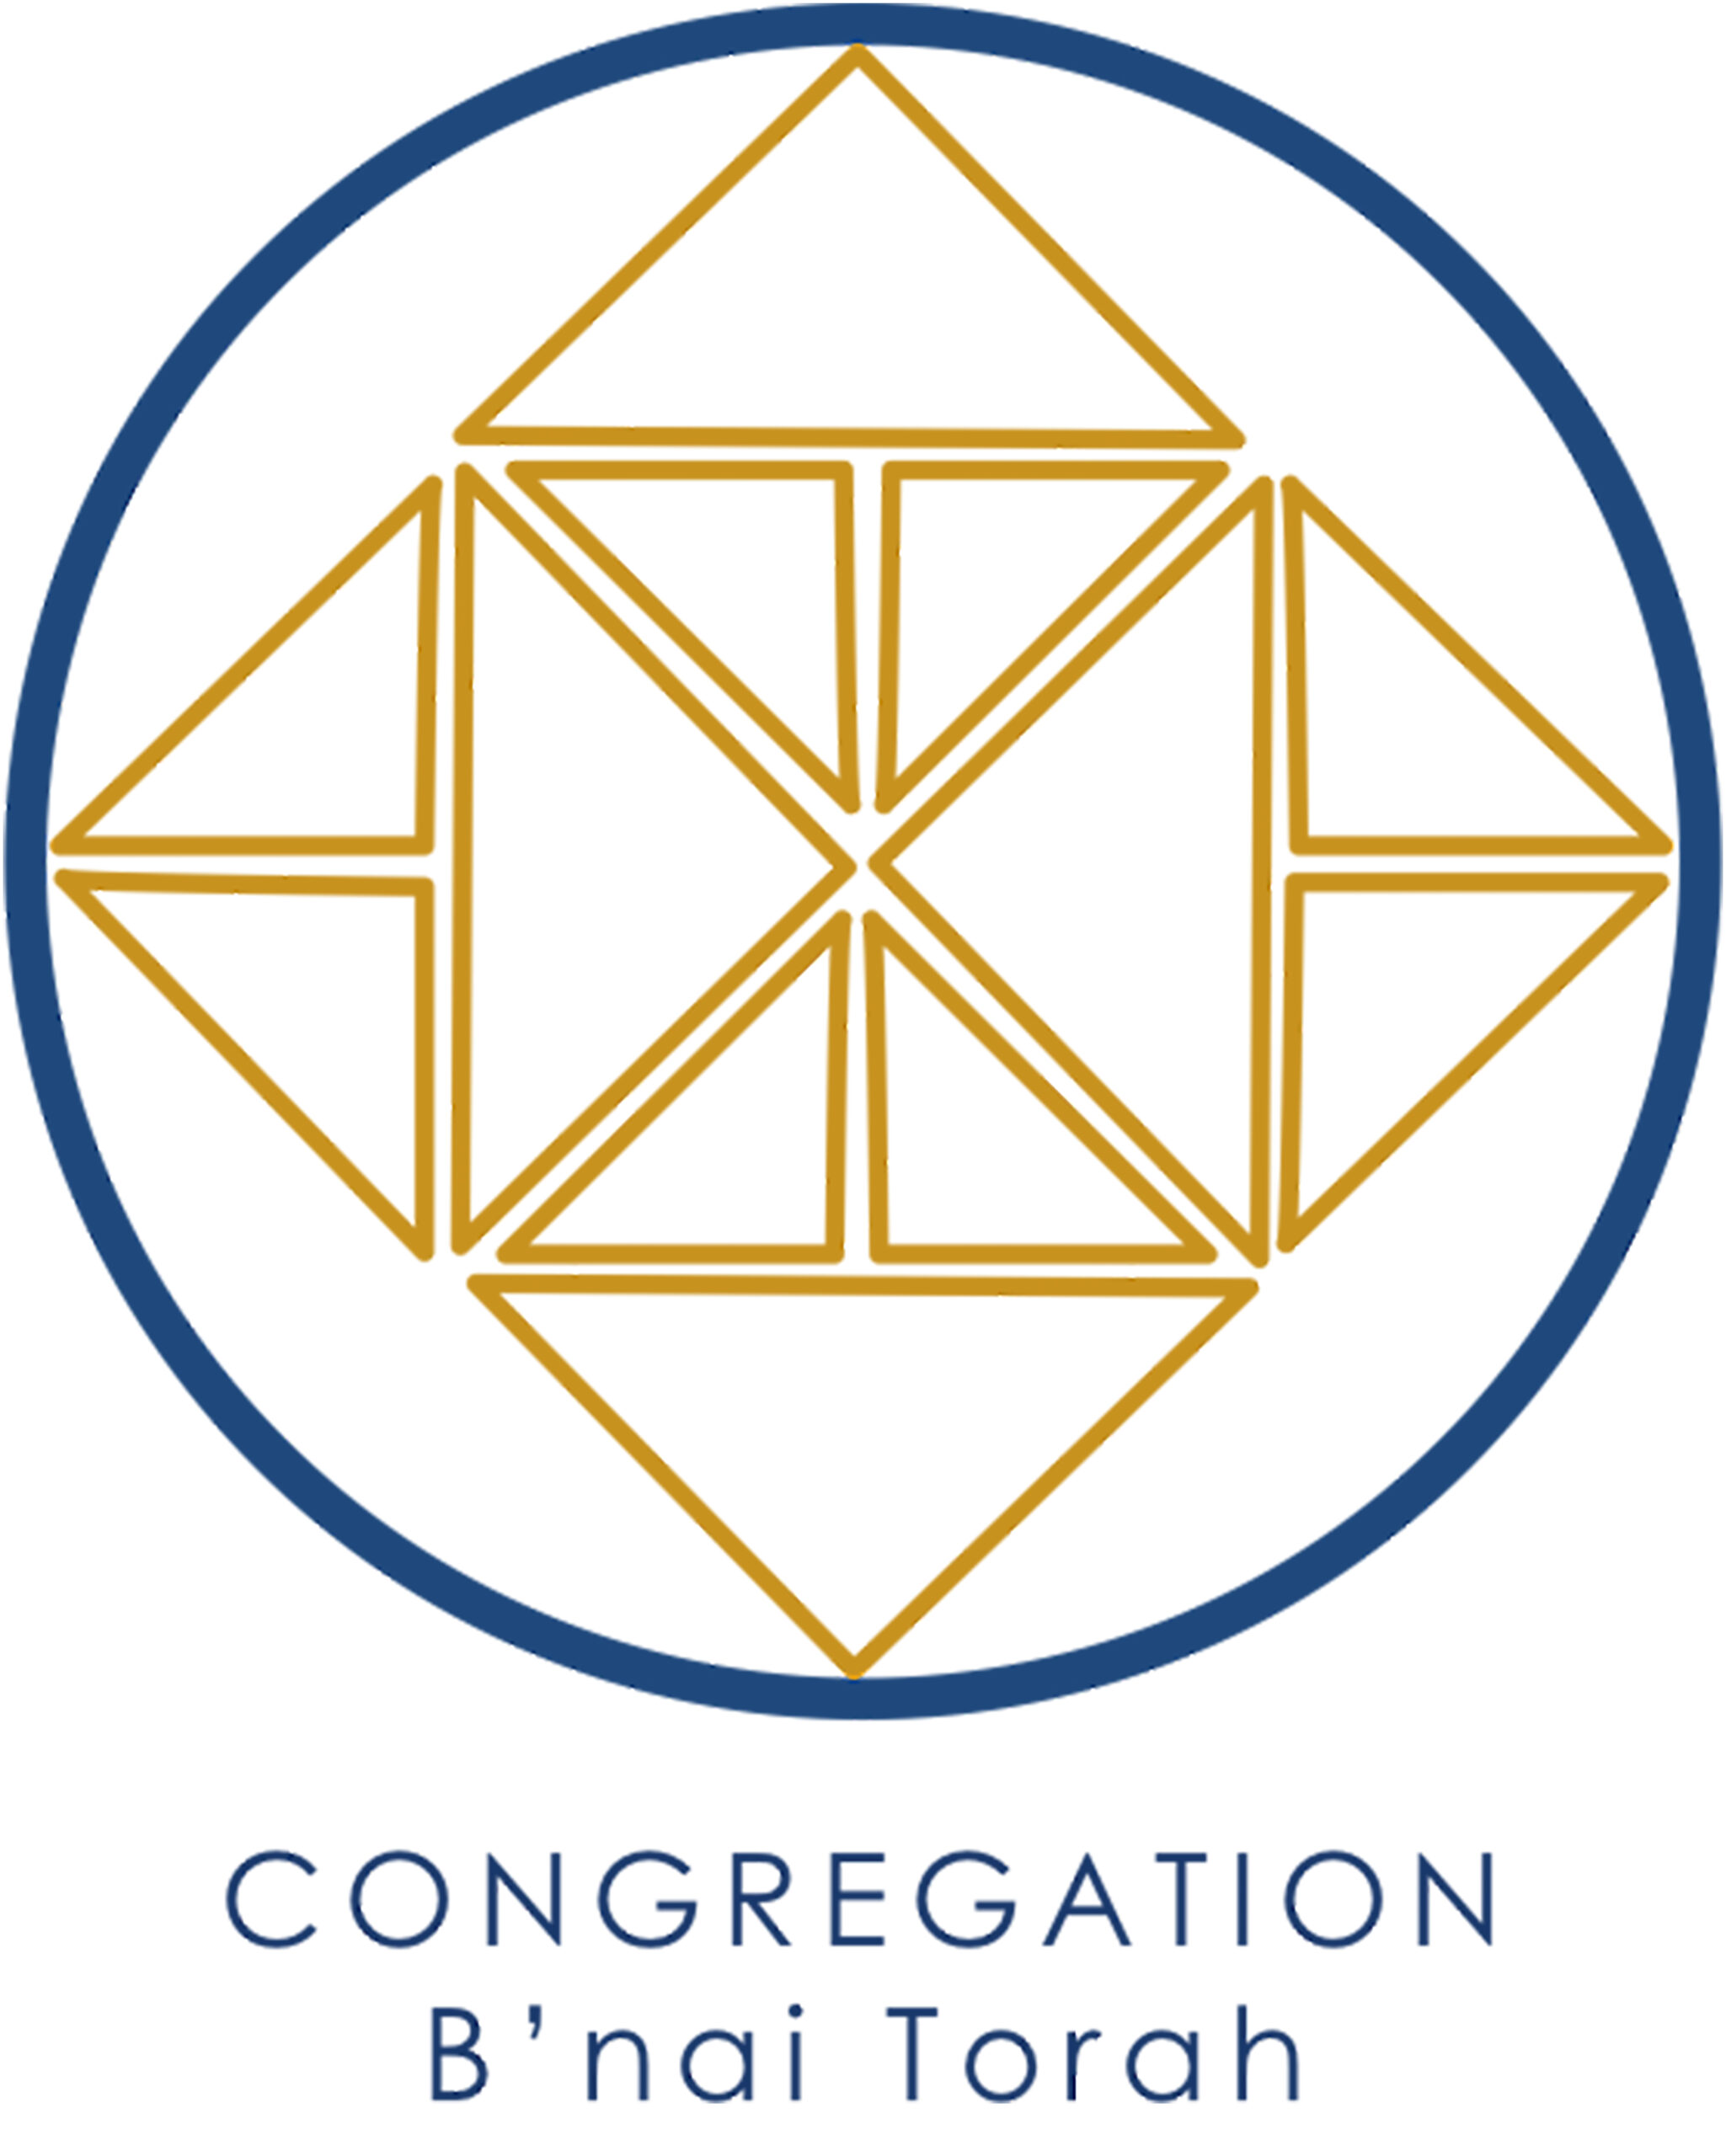 Congregation B'nai Torah - logo